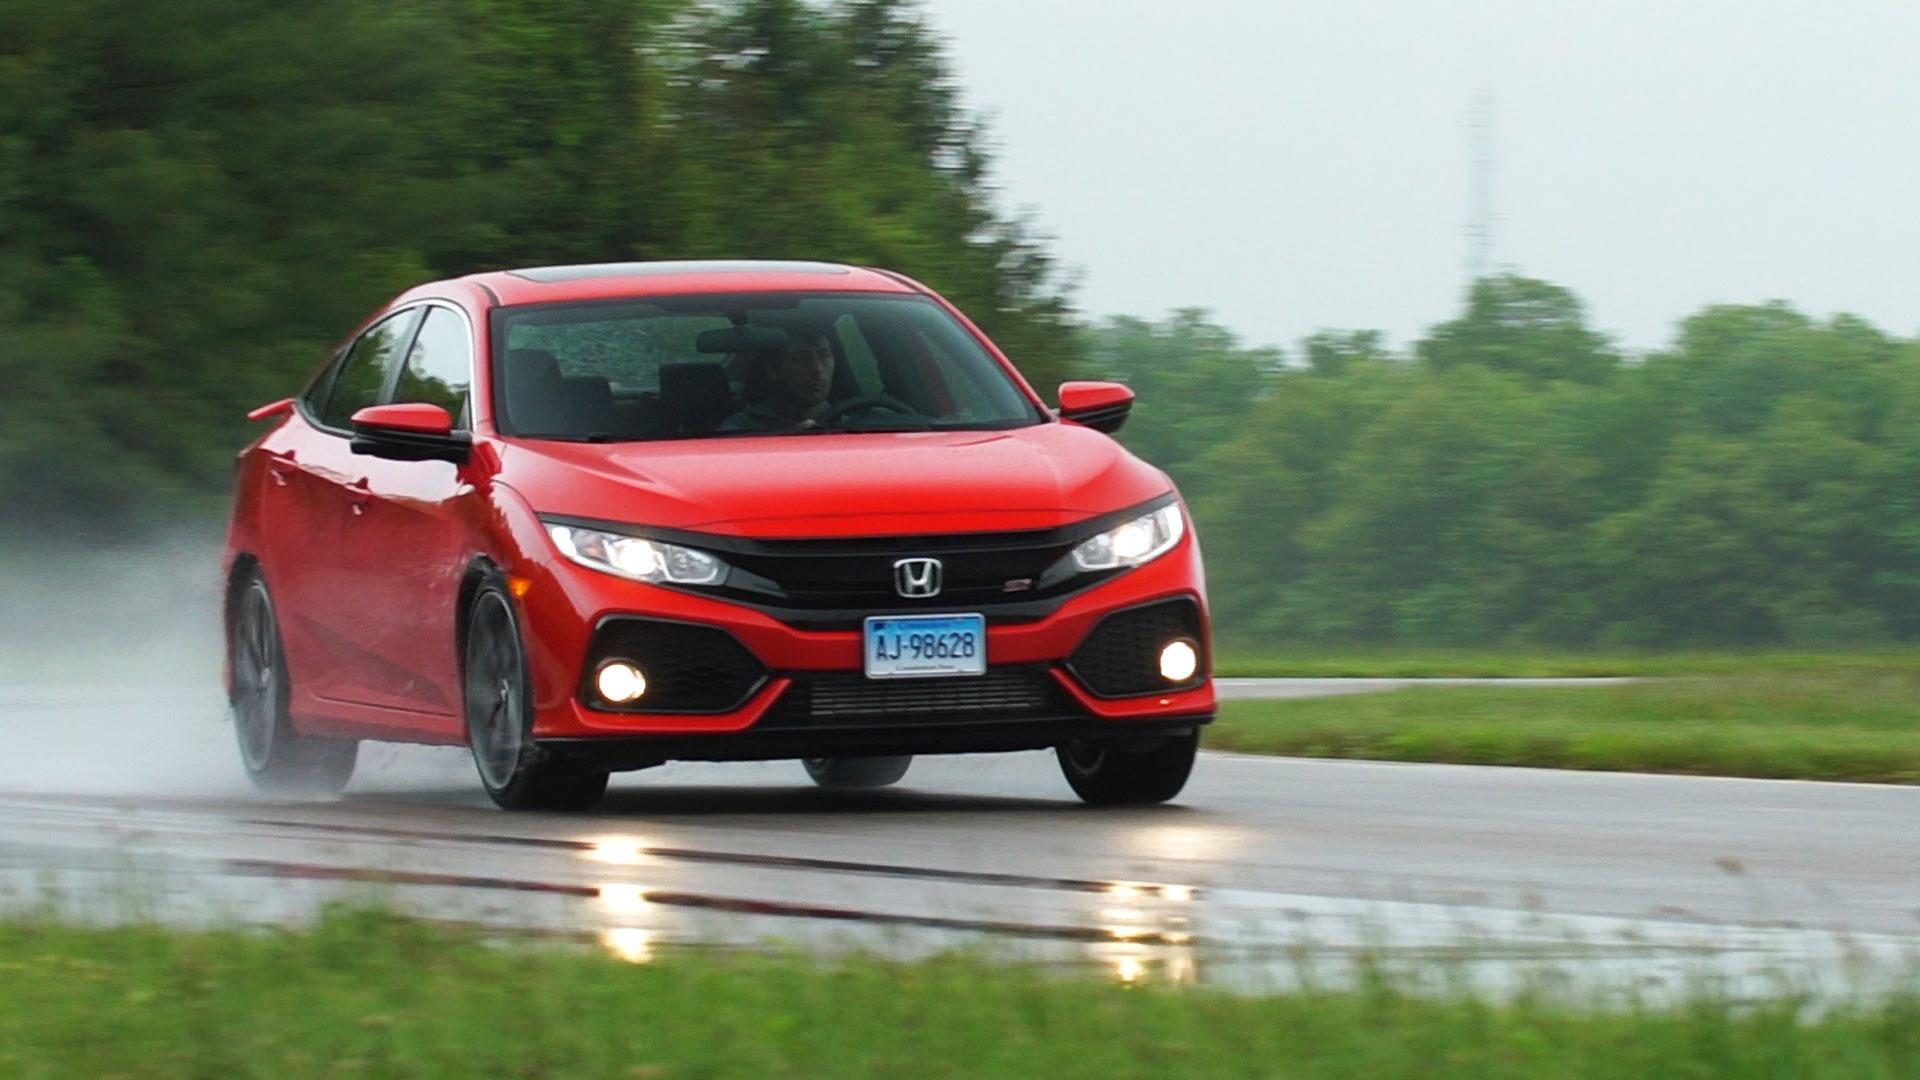 Honda Civic - Consumer Reports